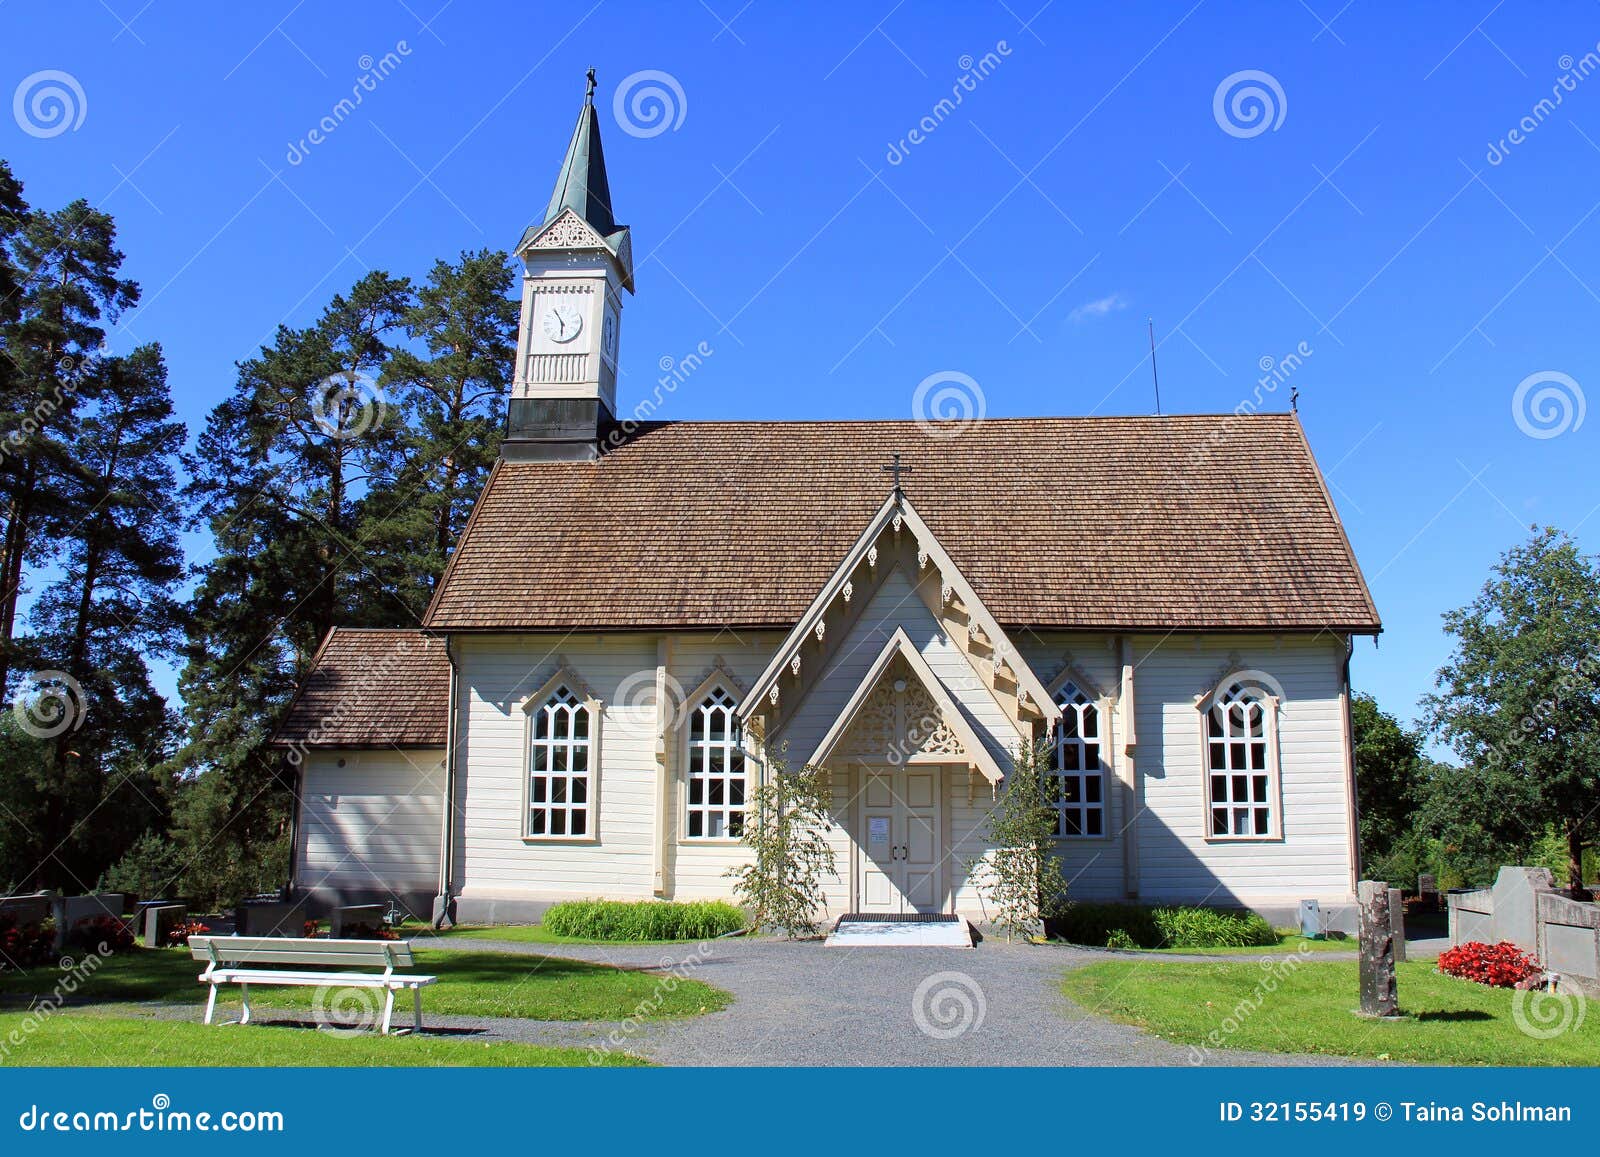 jokioinen lacework church